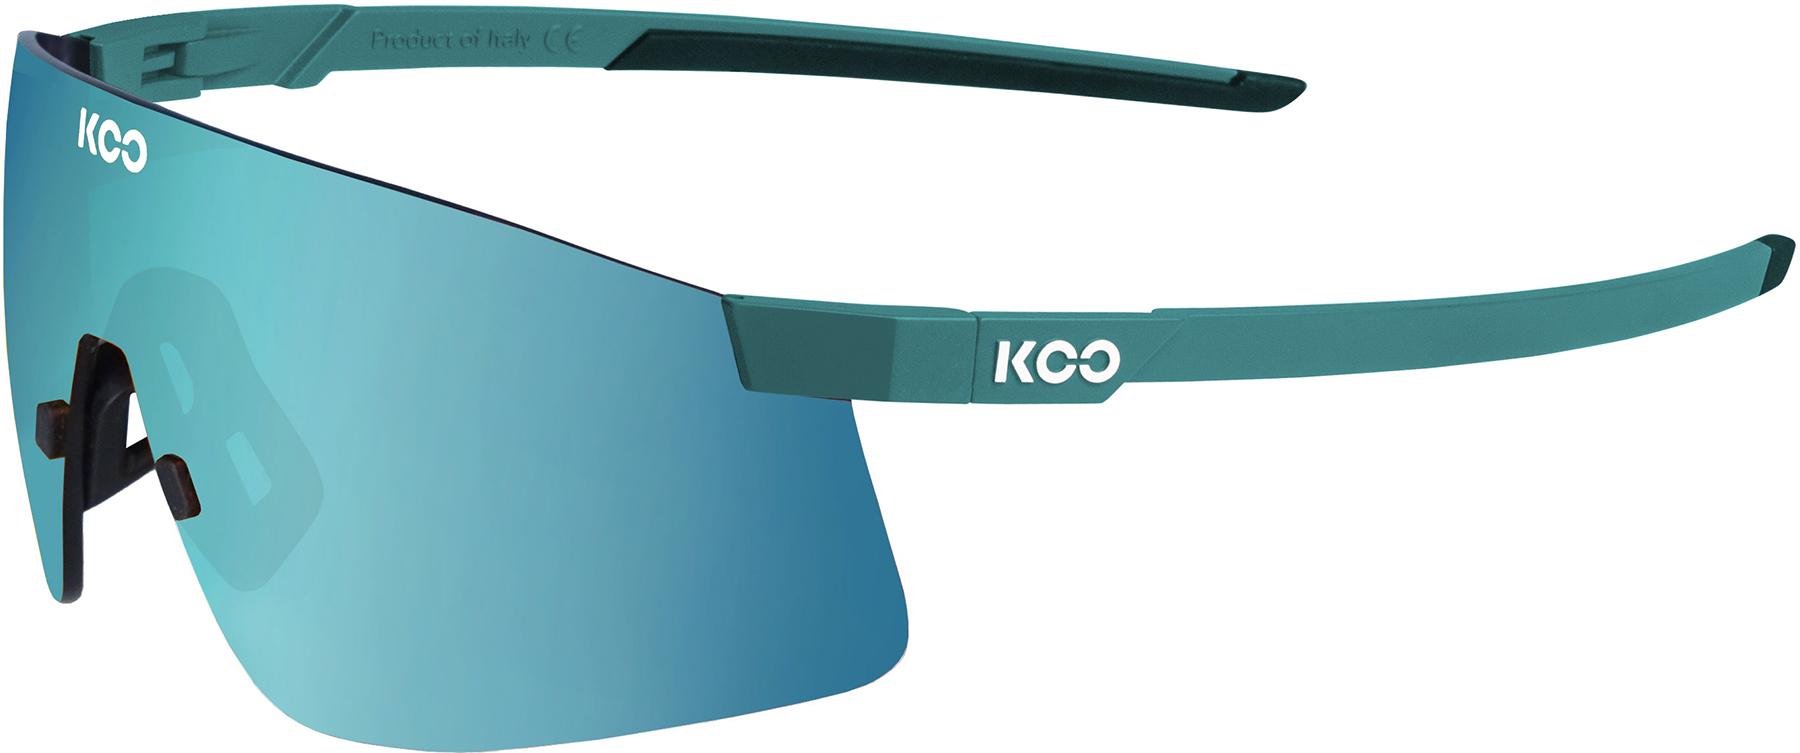 Koo Nova Aqua Matt Sunglasses (turquoise Mirror Lens) - Aqua Matte/turquoise